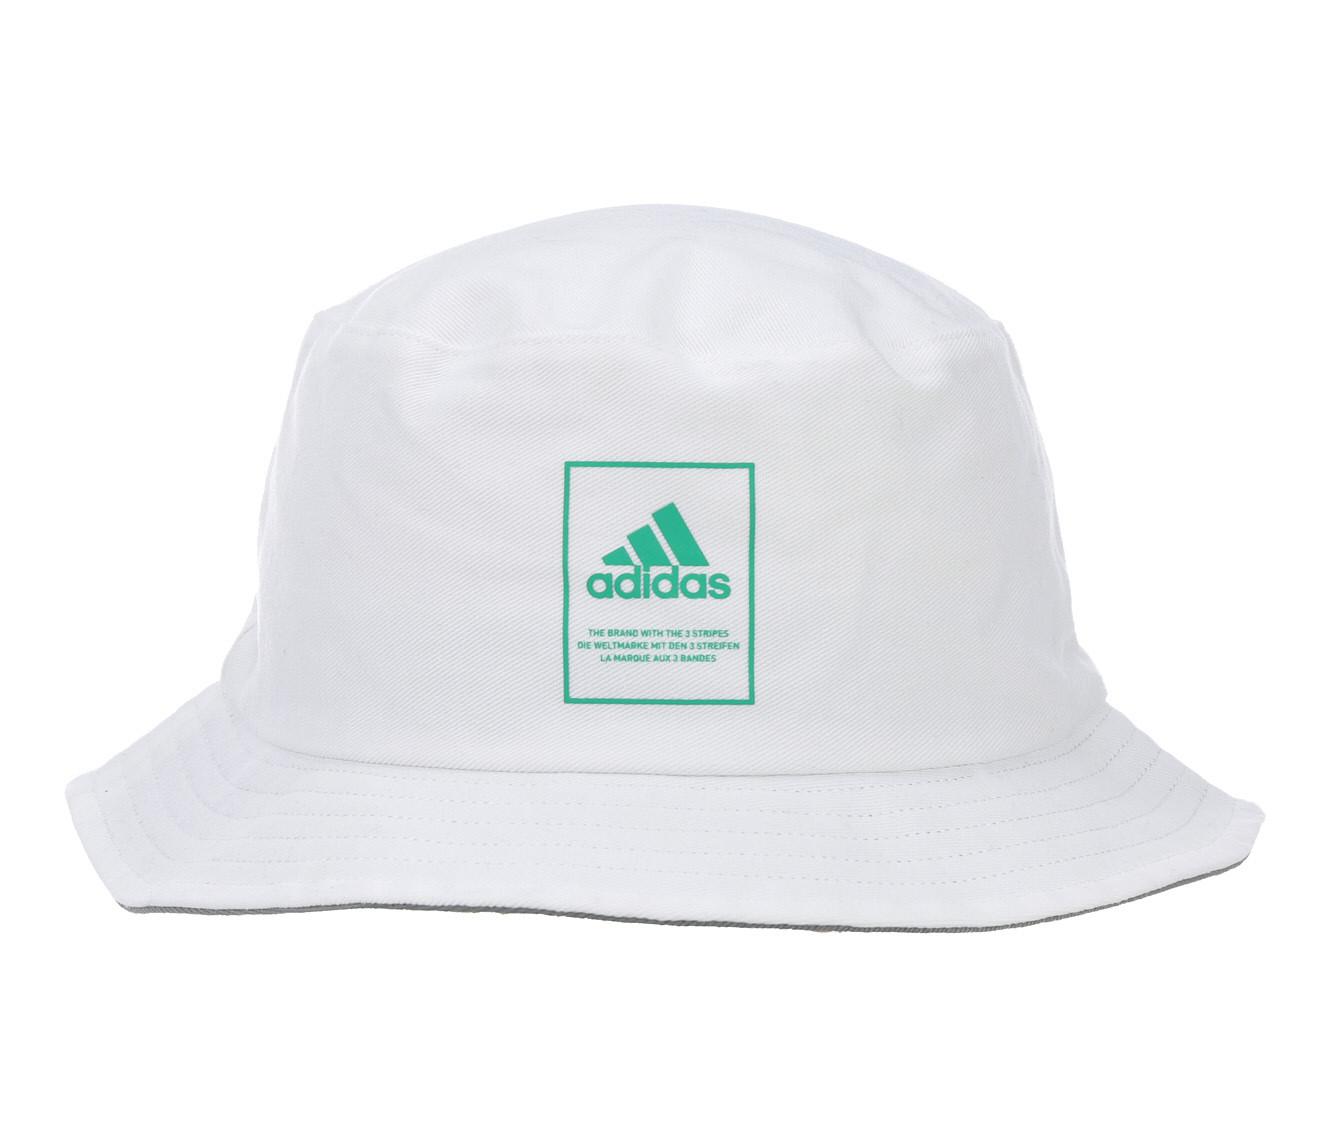 Adidas Men's Lifestyle Bucket Hat